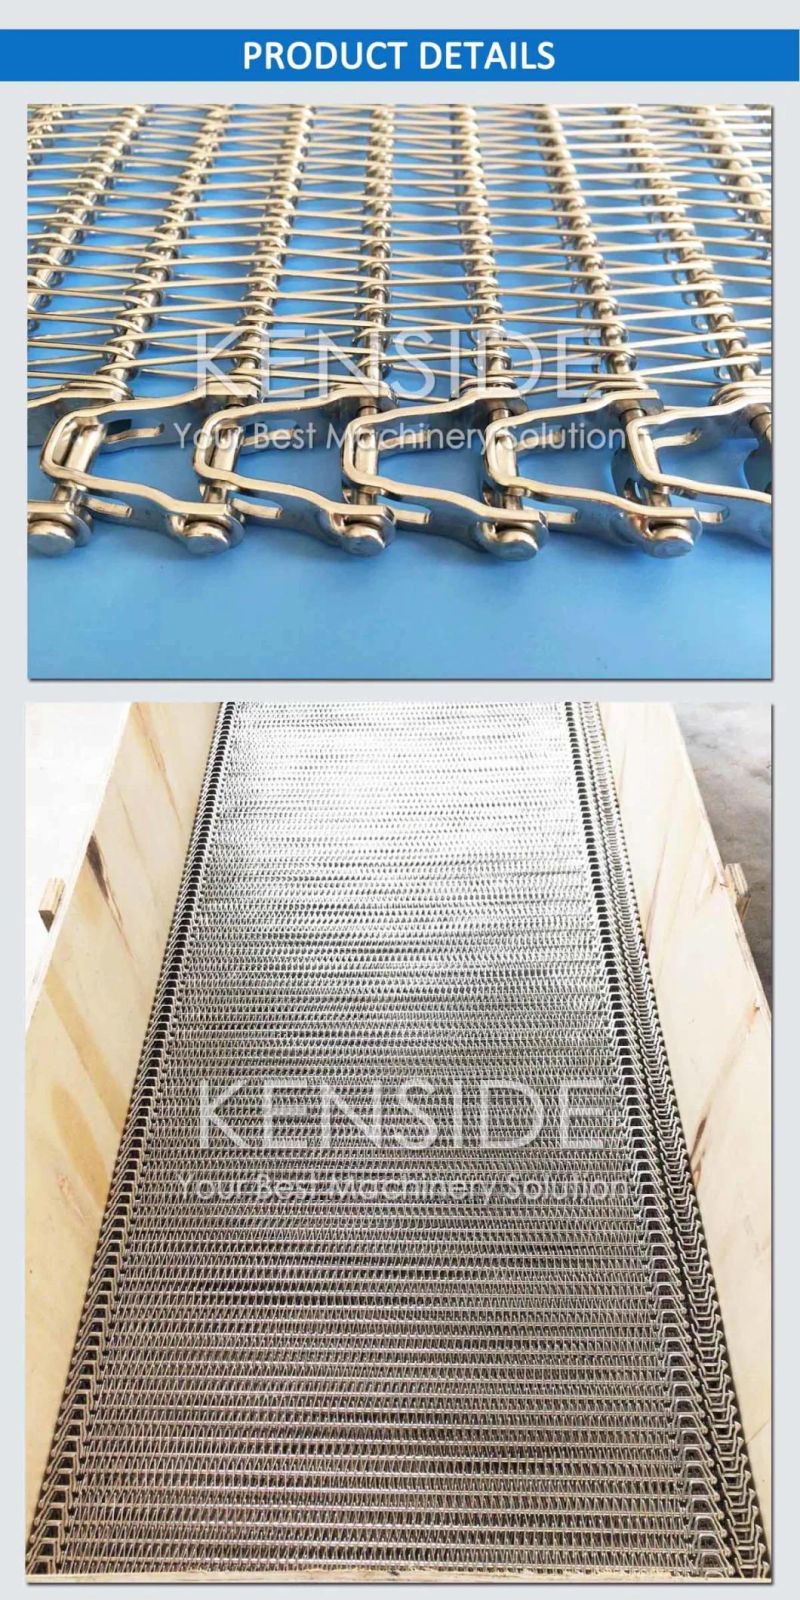 Stainless Steel Belting Spiral Conveyor Belts Reduced Radius Belts for Food Plants, Food Machines